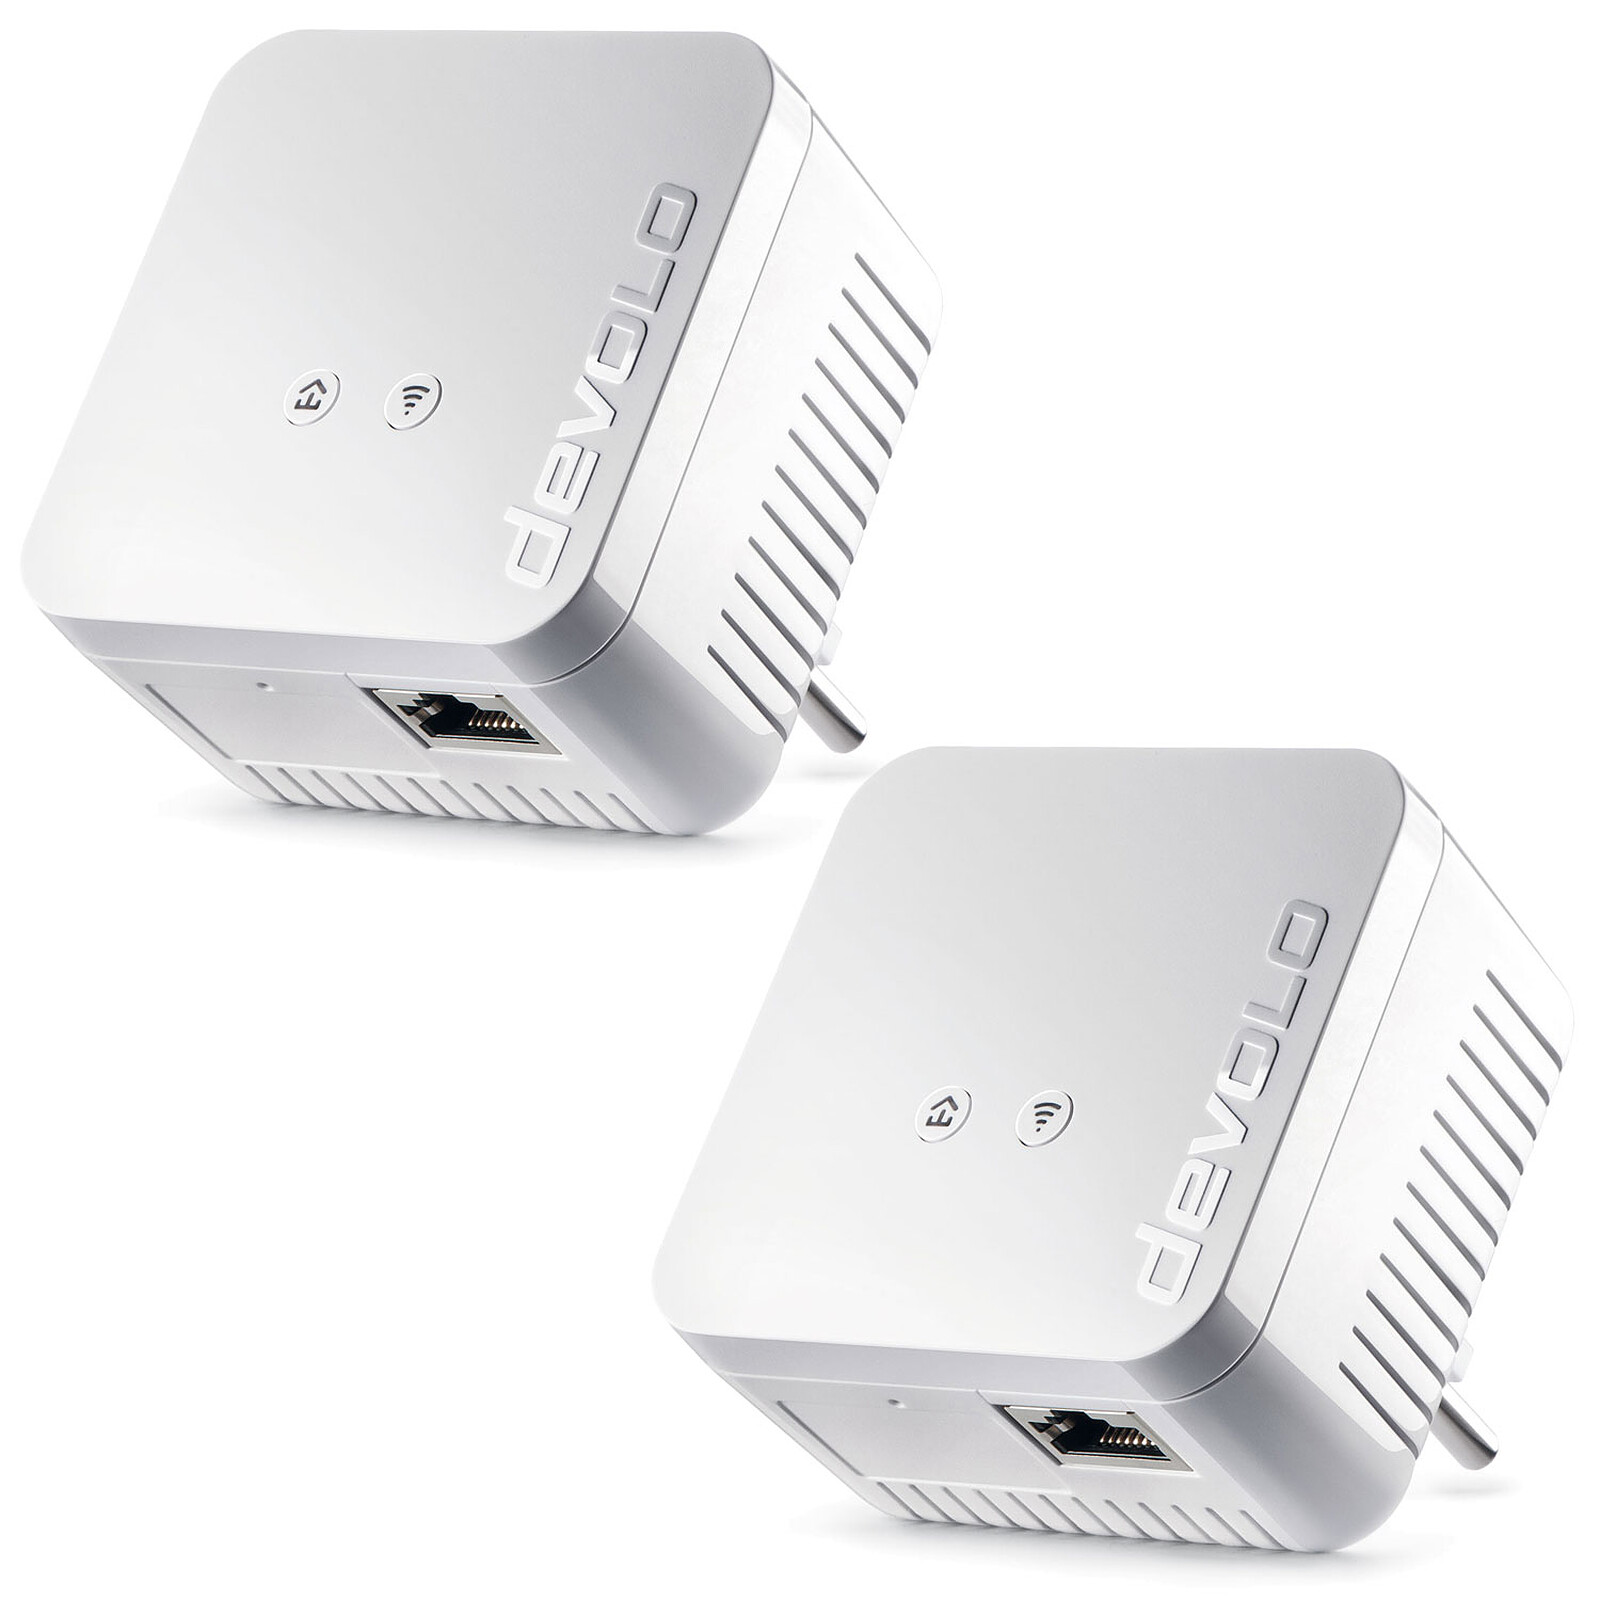 Devolo dLAN 550 Wi-Fi x2 - Powerline adapter - LDLC 3-year warranty